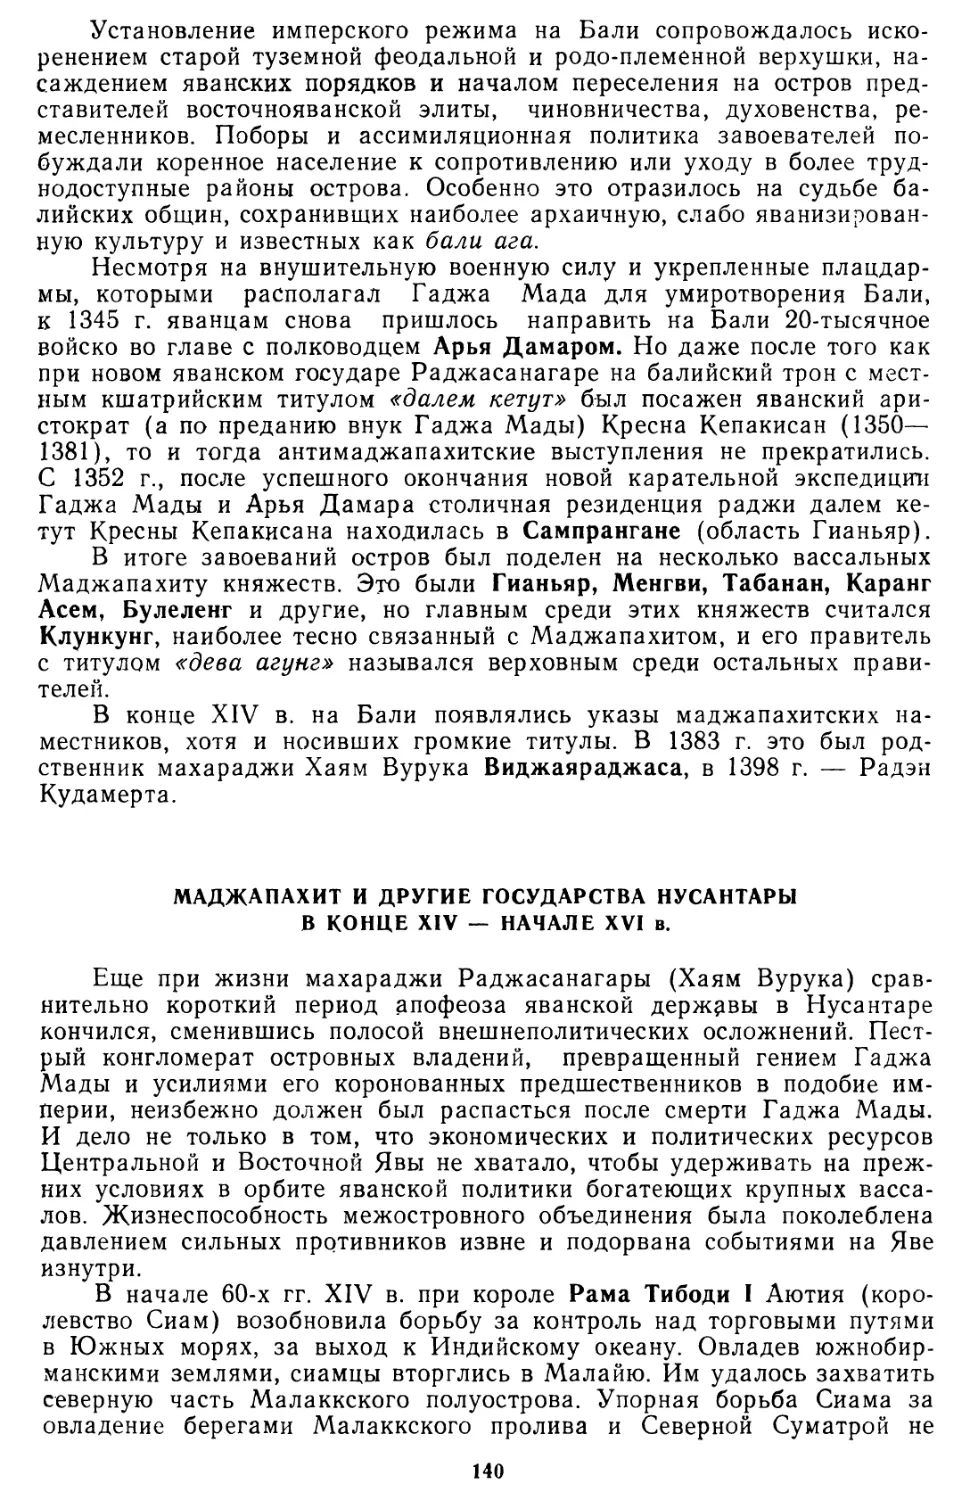 Маджапахит и другие государства Нусантары в конце XIV — начале XVI в.